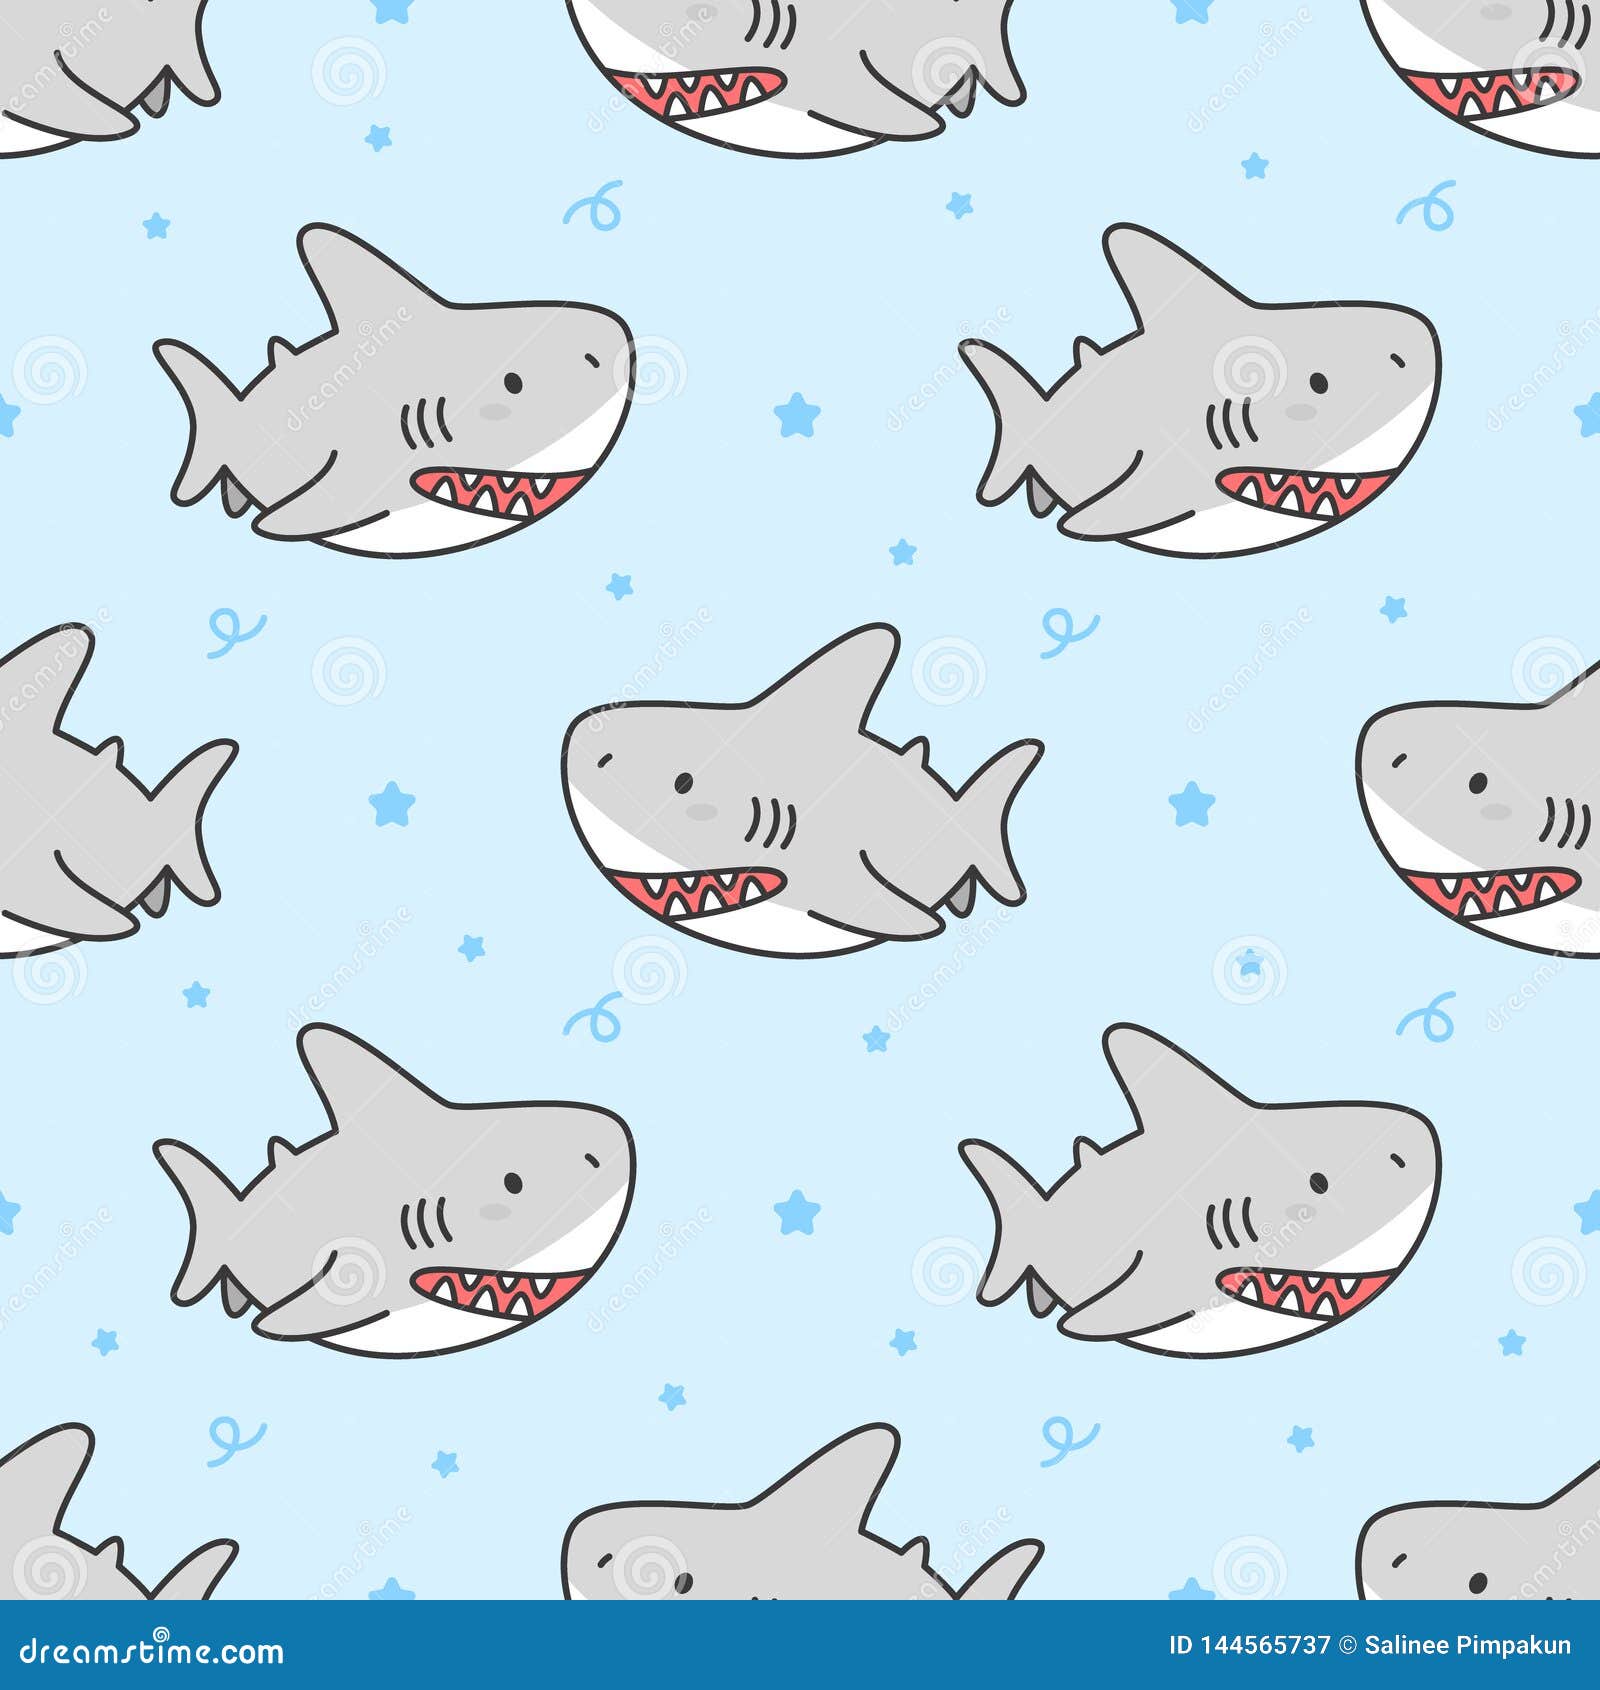 33 Shark Backgrounds  WallpaperSafari